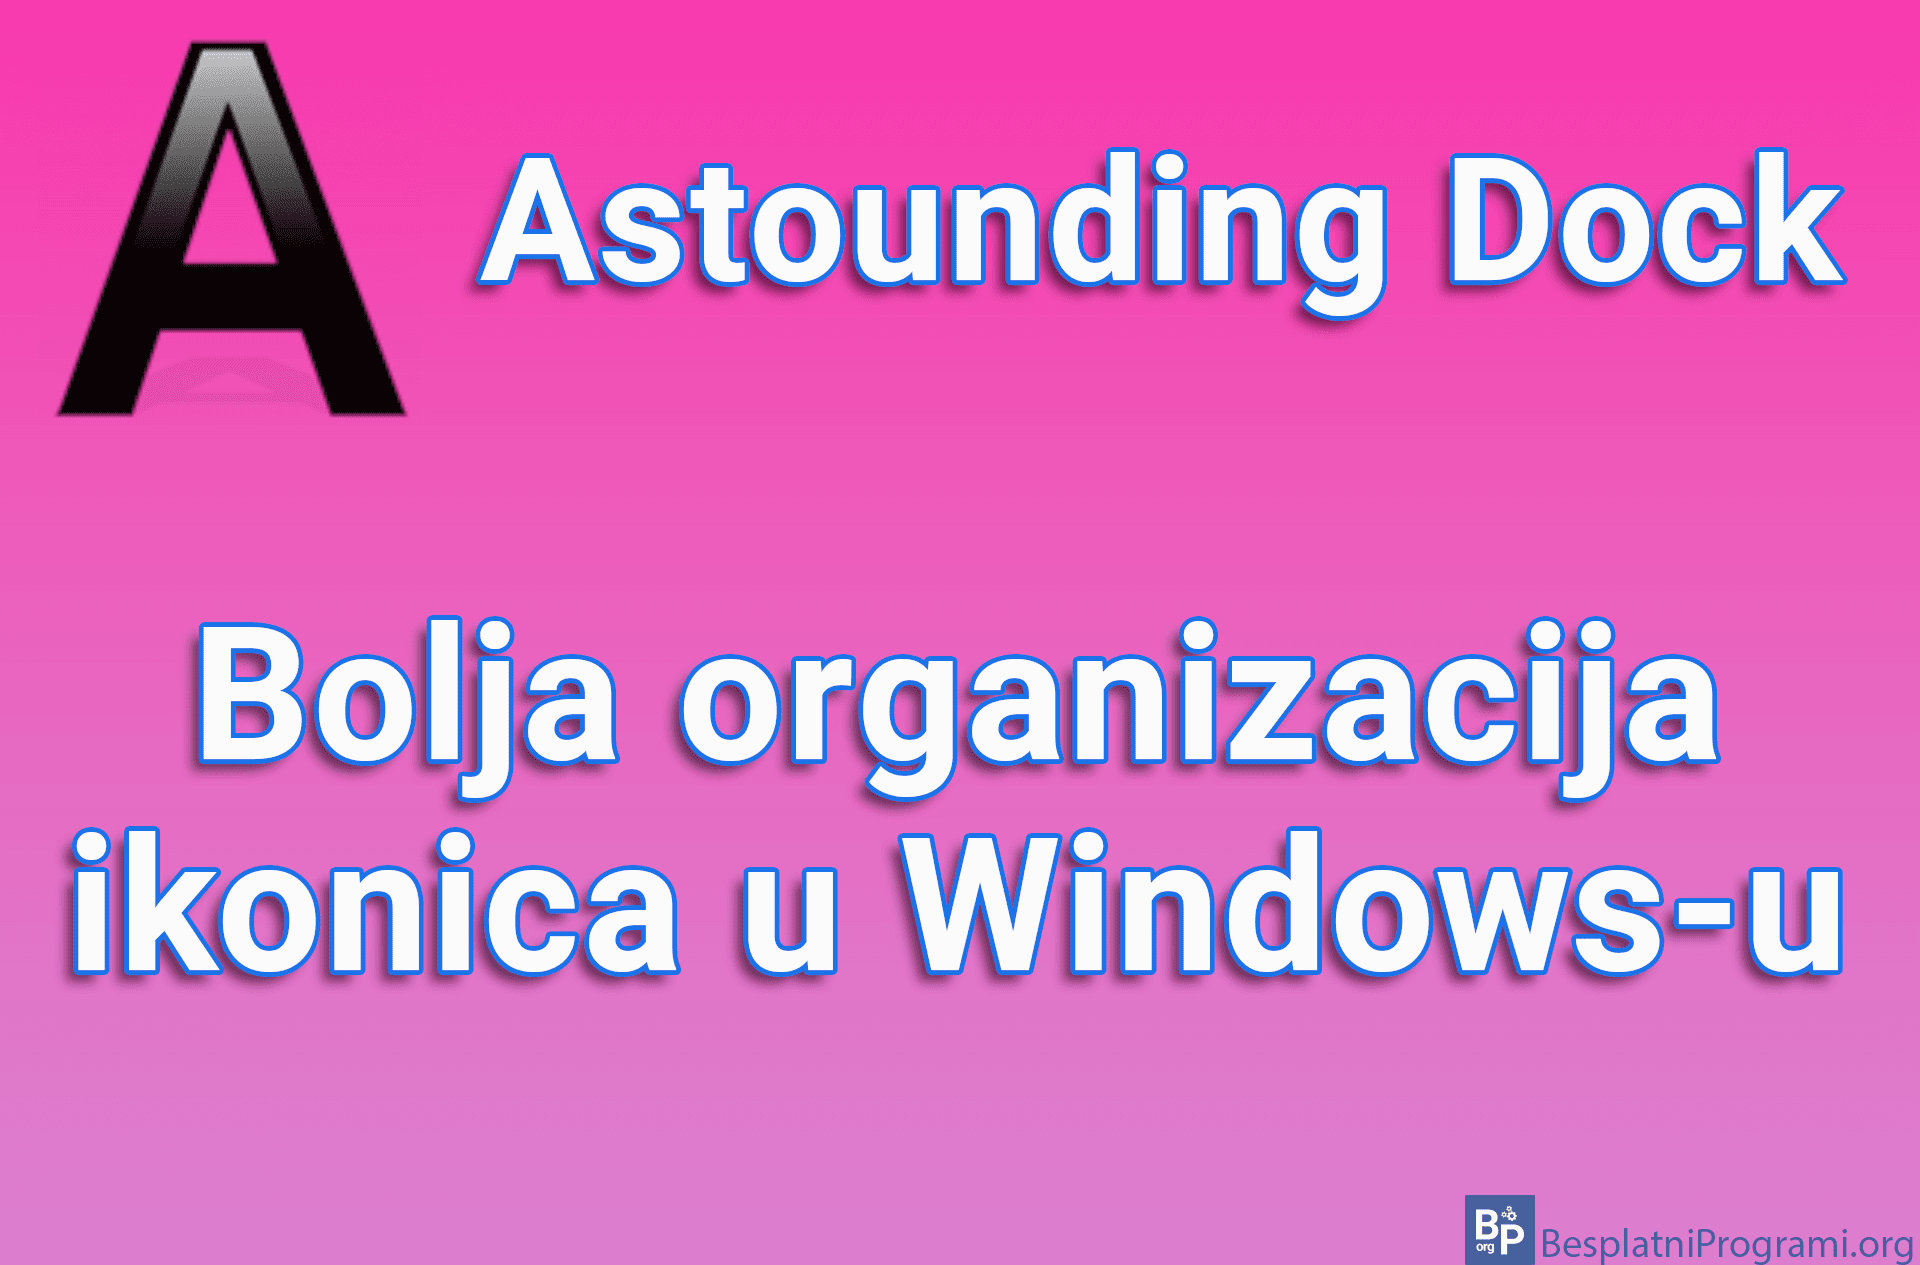 Astounding Dock – Bolja organizacija ikonica u Windows-u